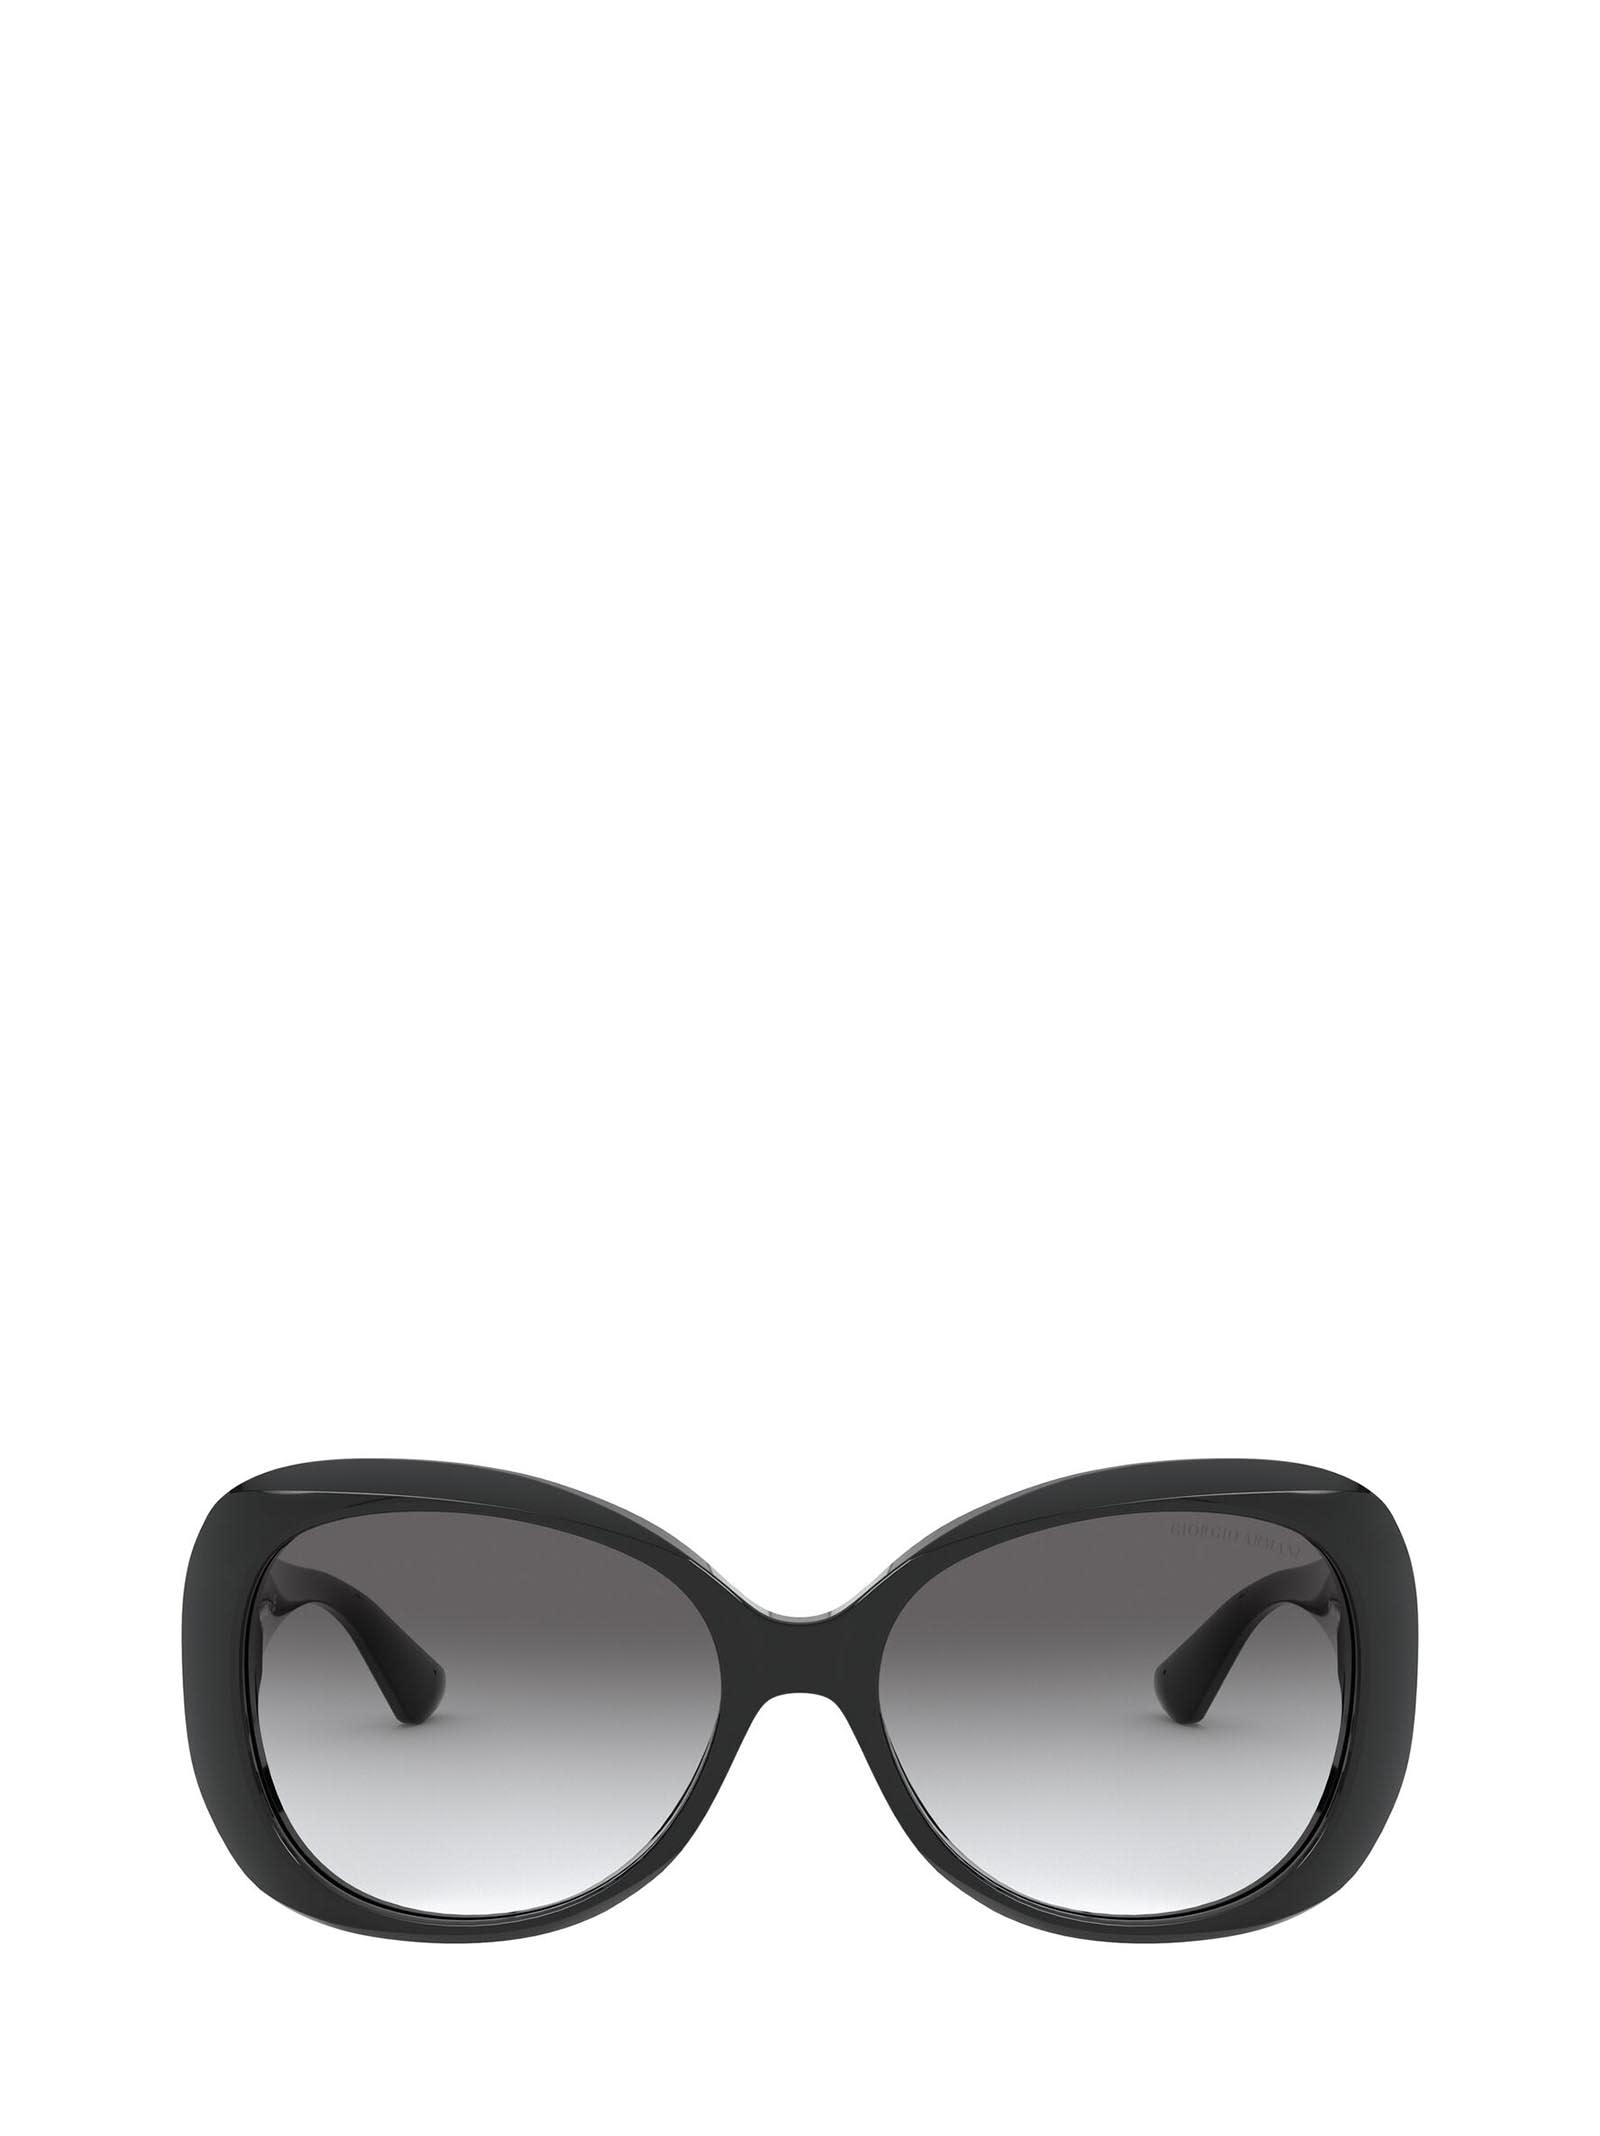 Giorgio Armani Giorgio Armani Ar8132 Black Sunglasses